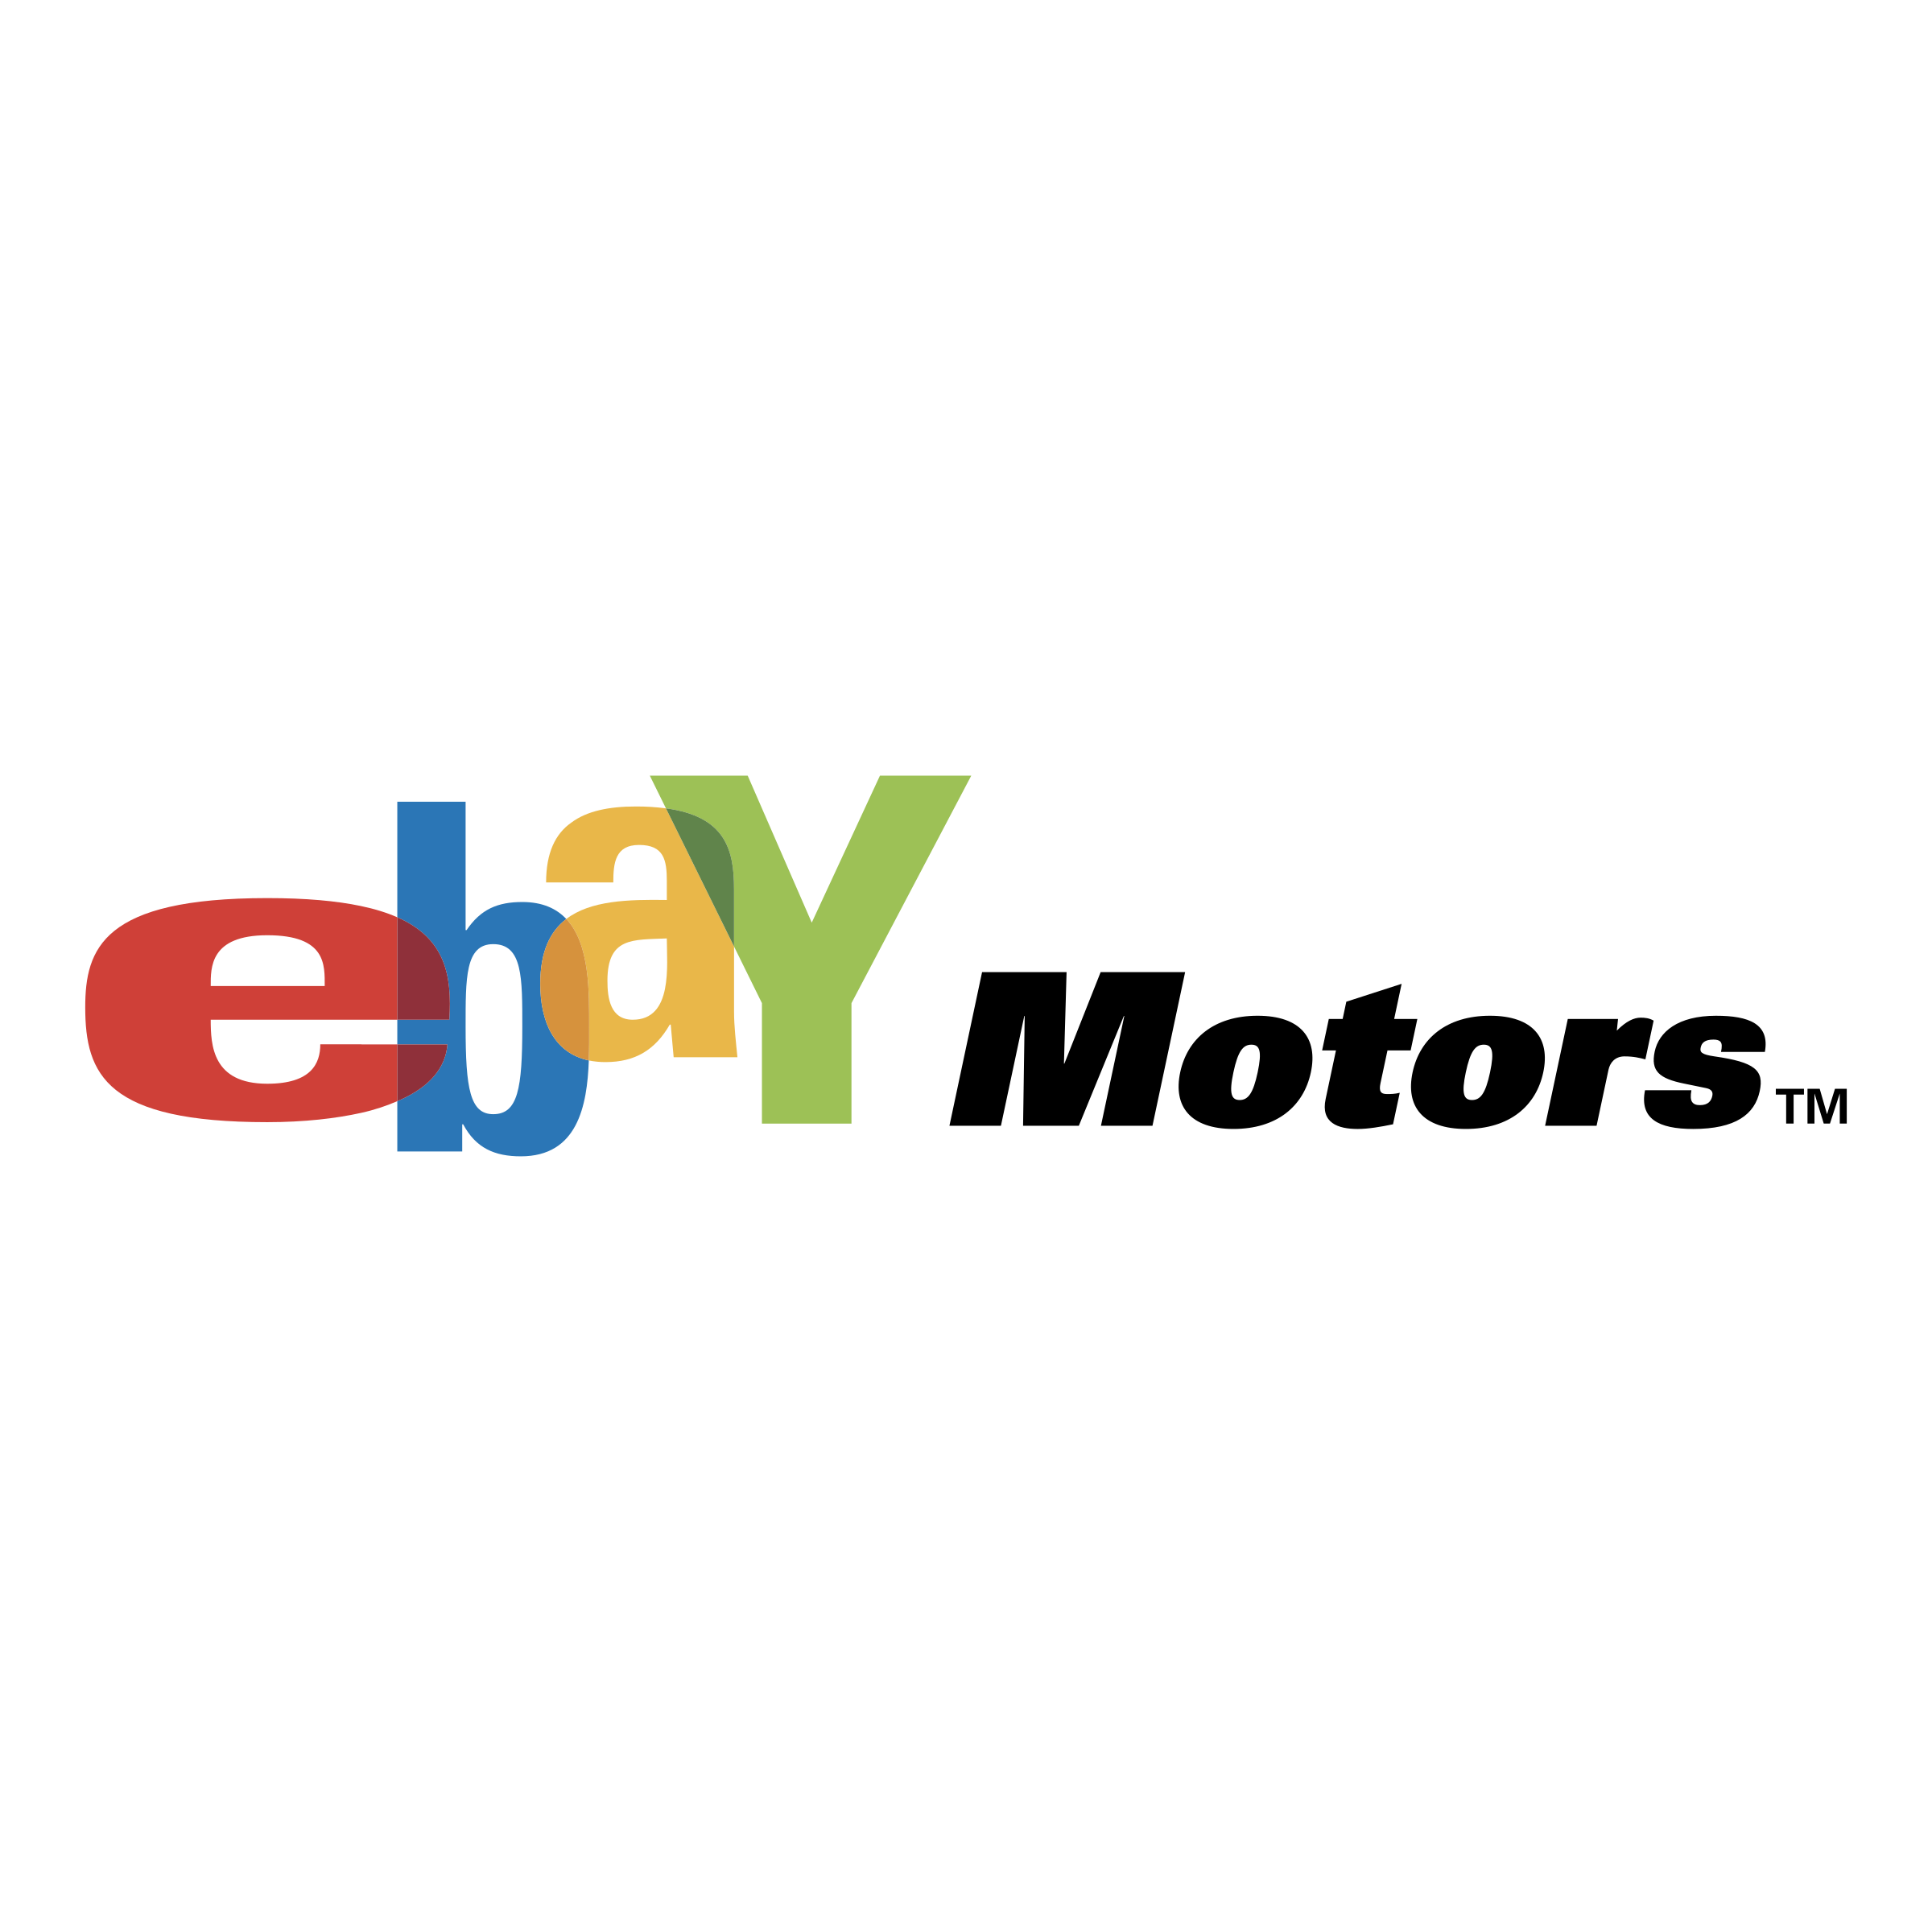 ebay logo PNG صورة خلفية شفافة